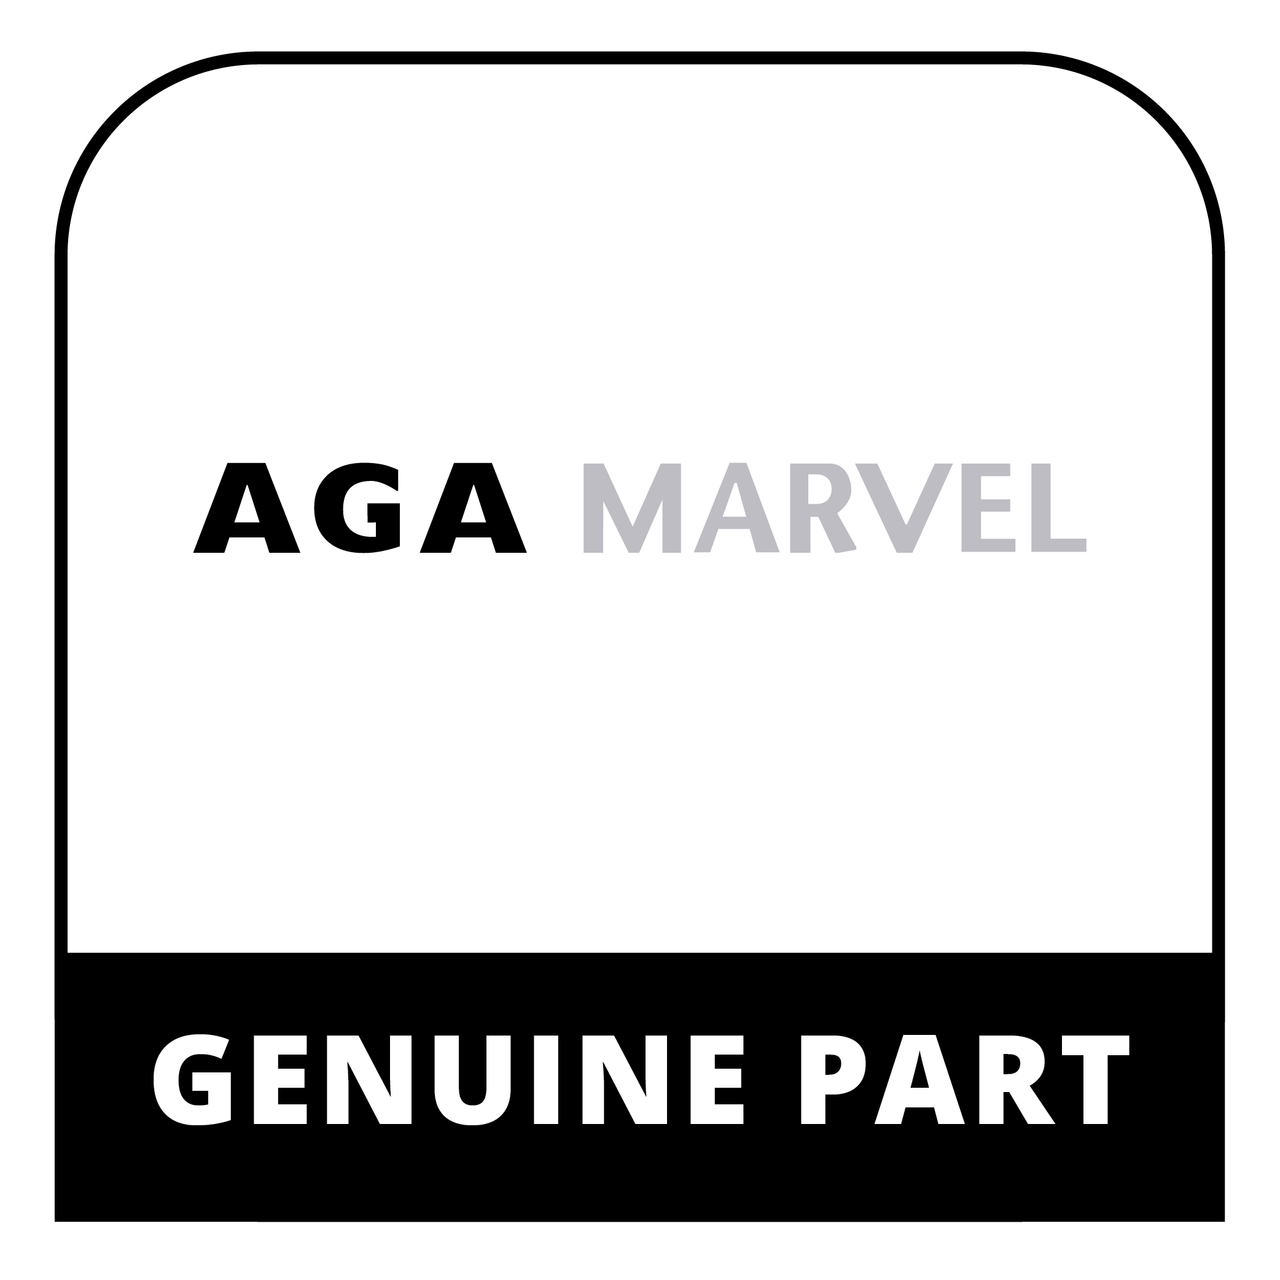 AGA Marvel AS2M200000 - Brkt Fire Door Location Aga - Genuine AGA Marvel Part